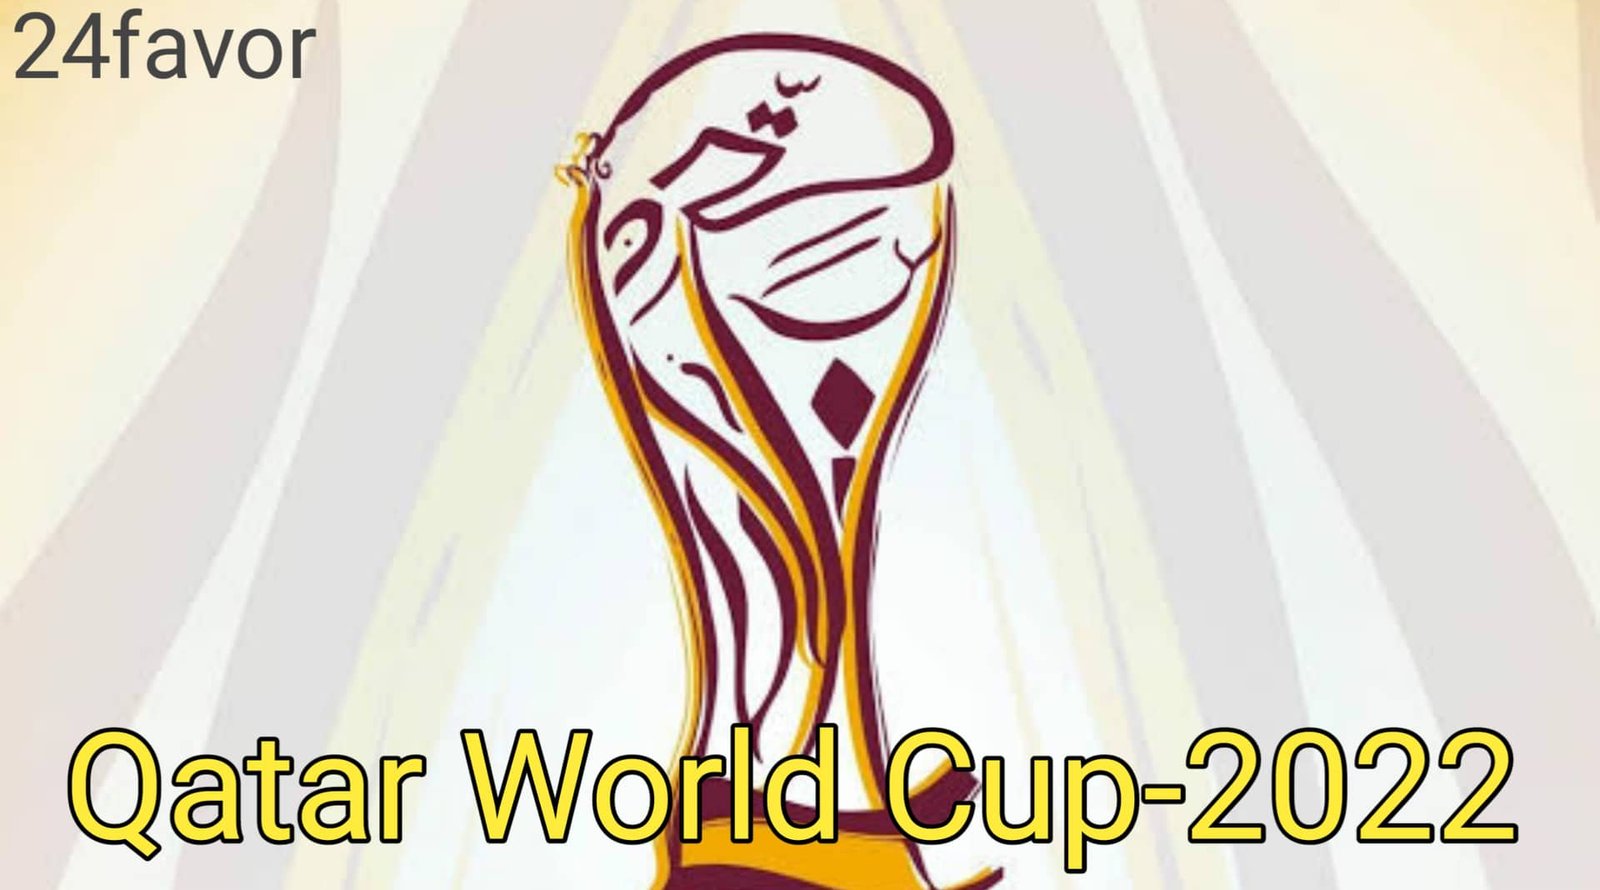 Qatar World Cup-2022